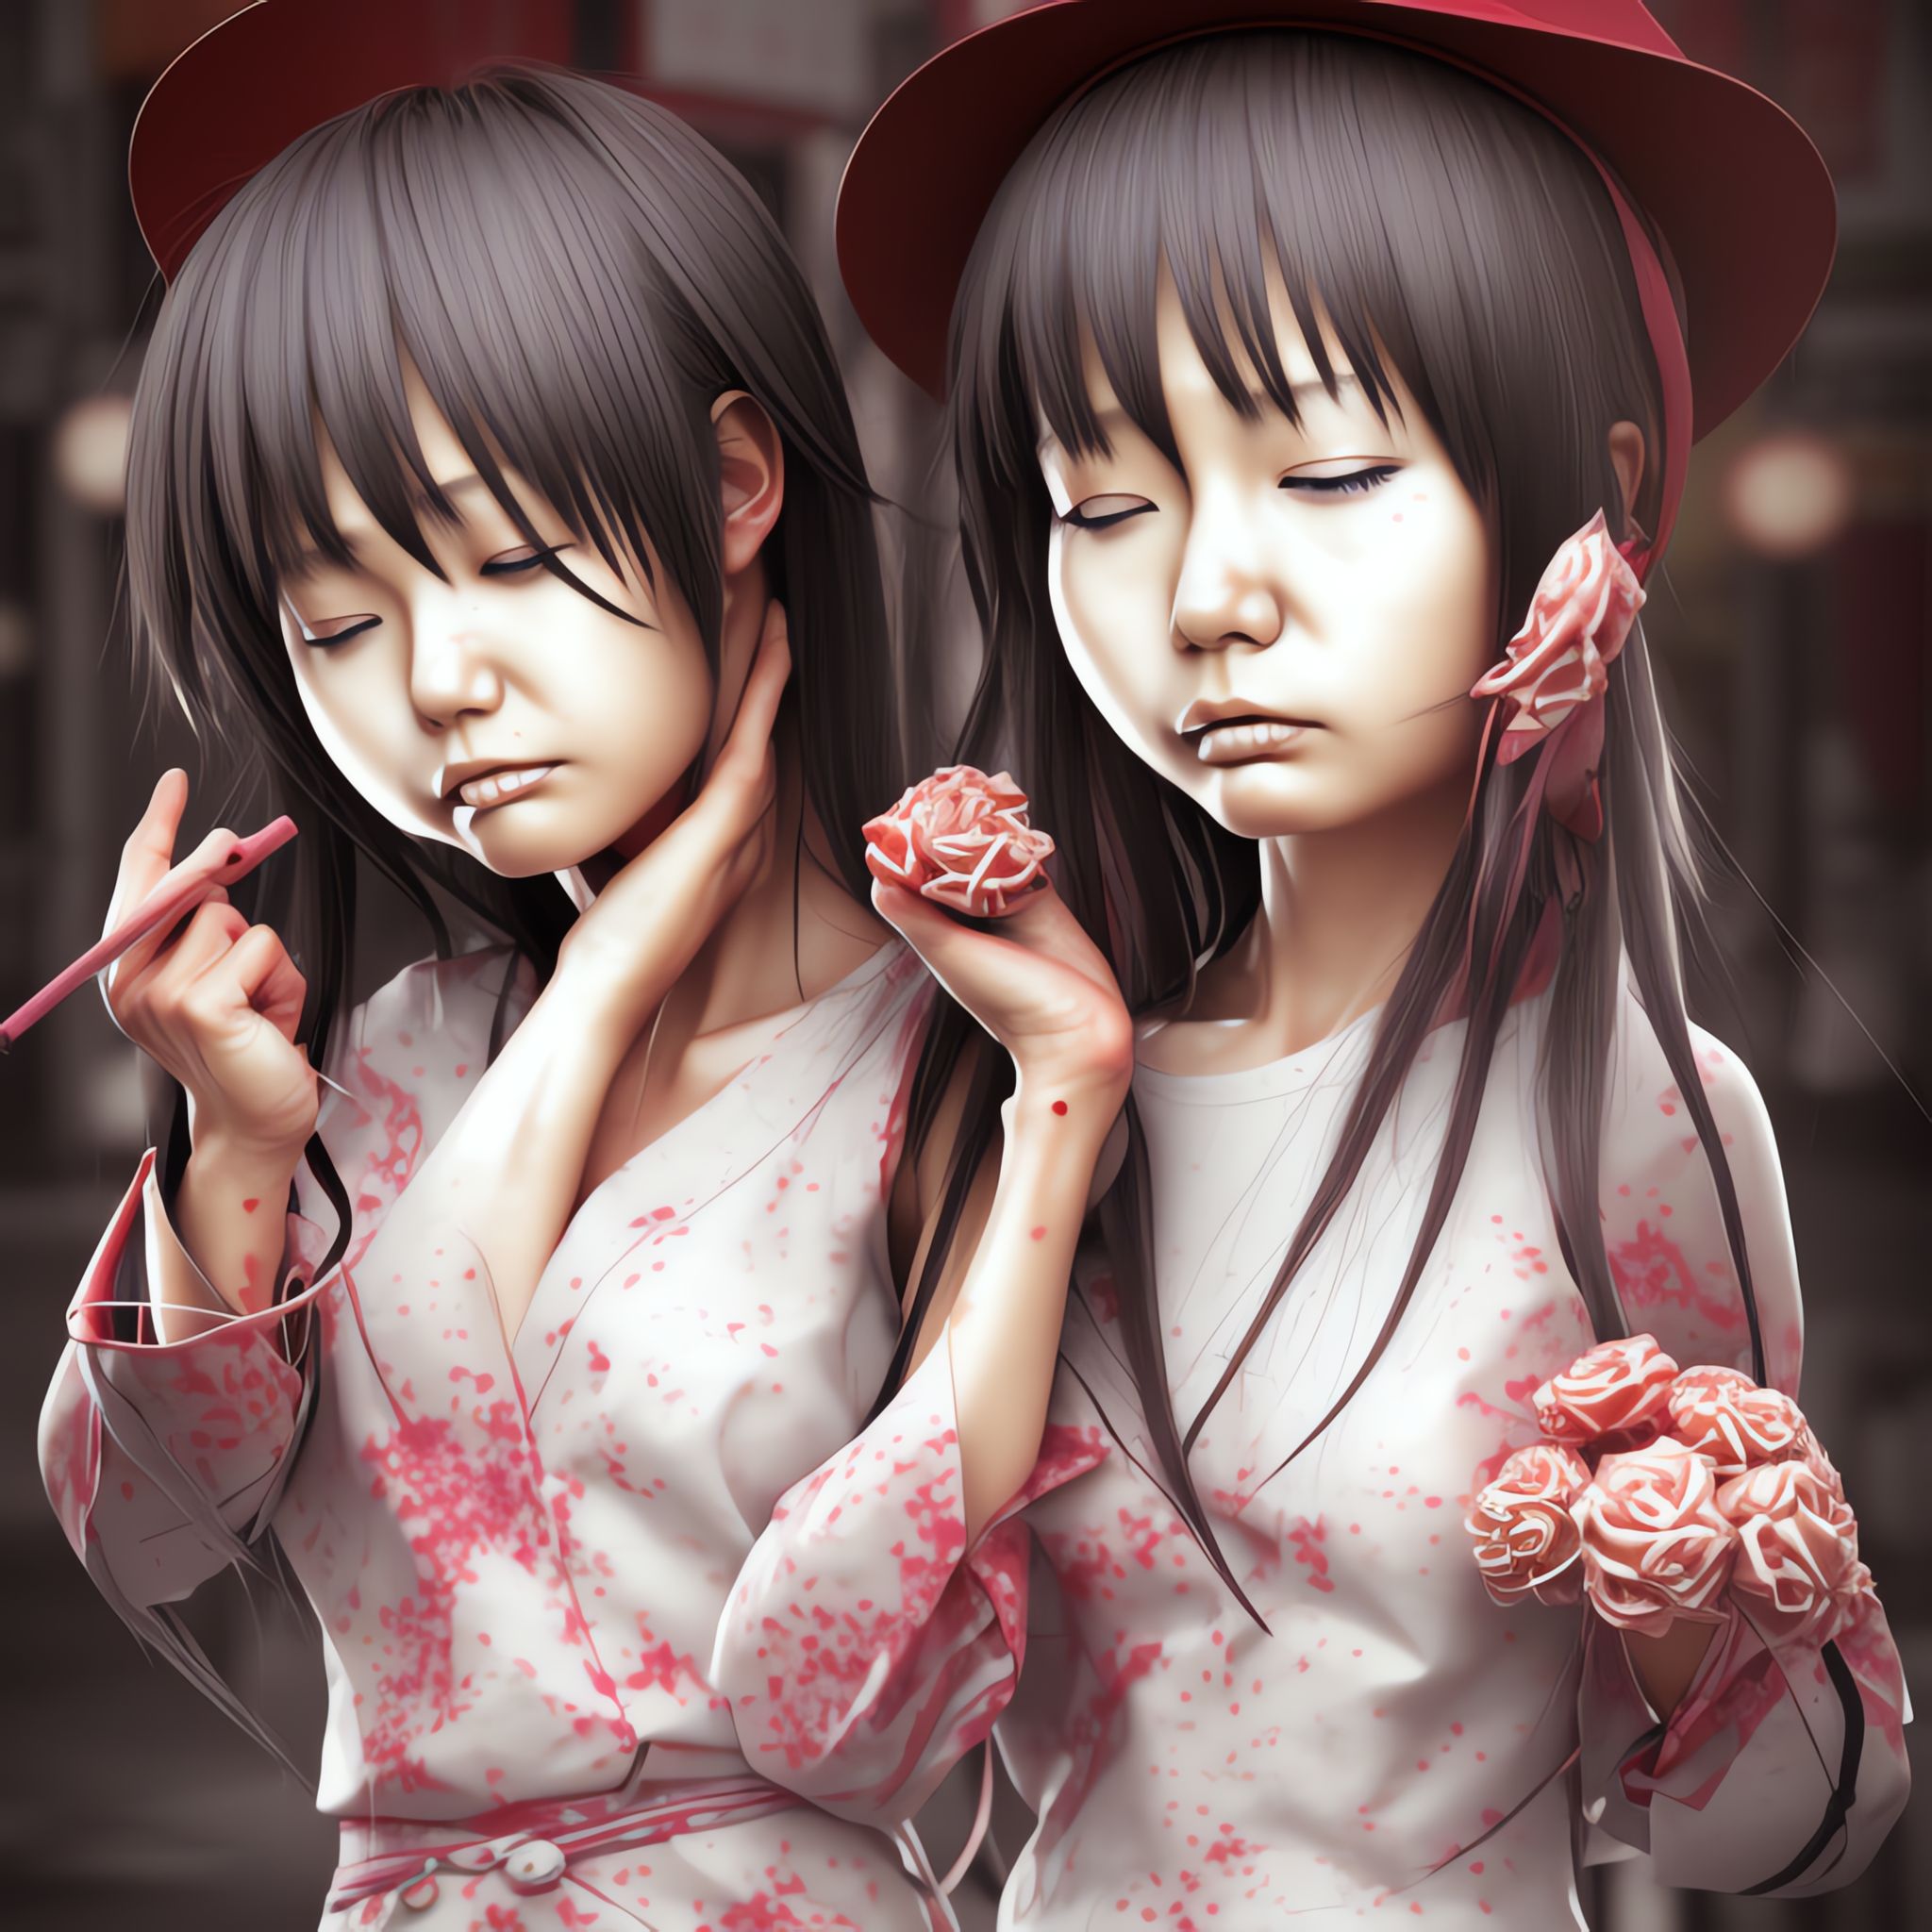 Melting Face Of A Japanese Girl 7 • Viarami 